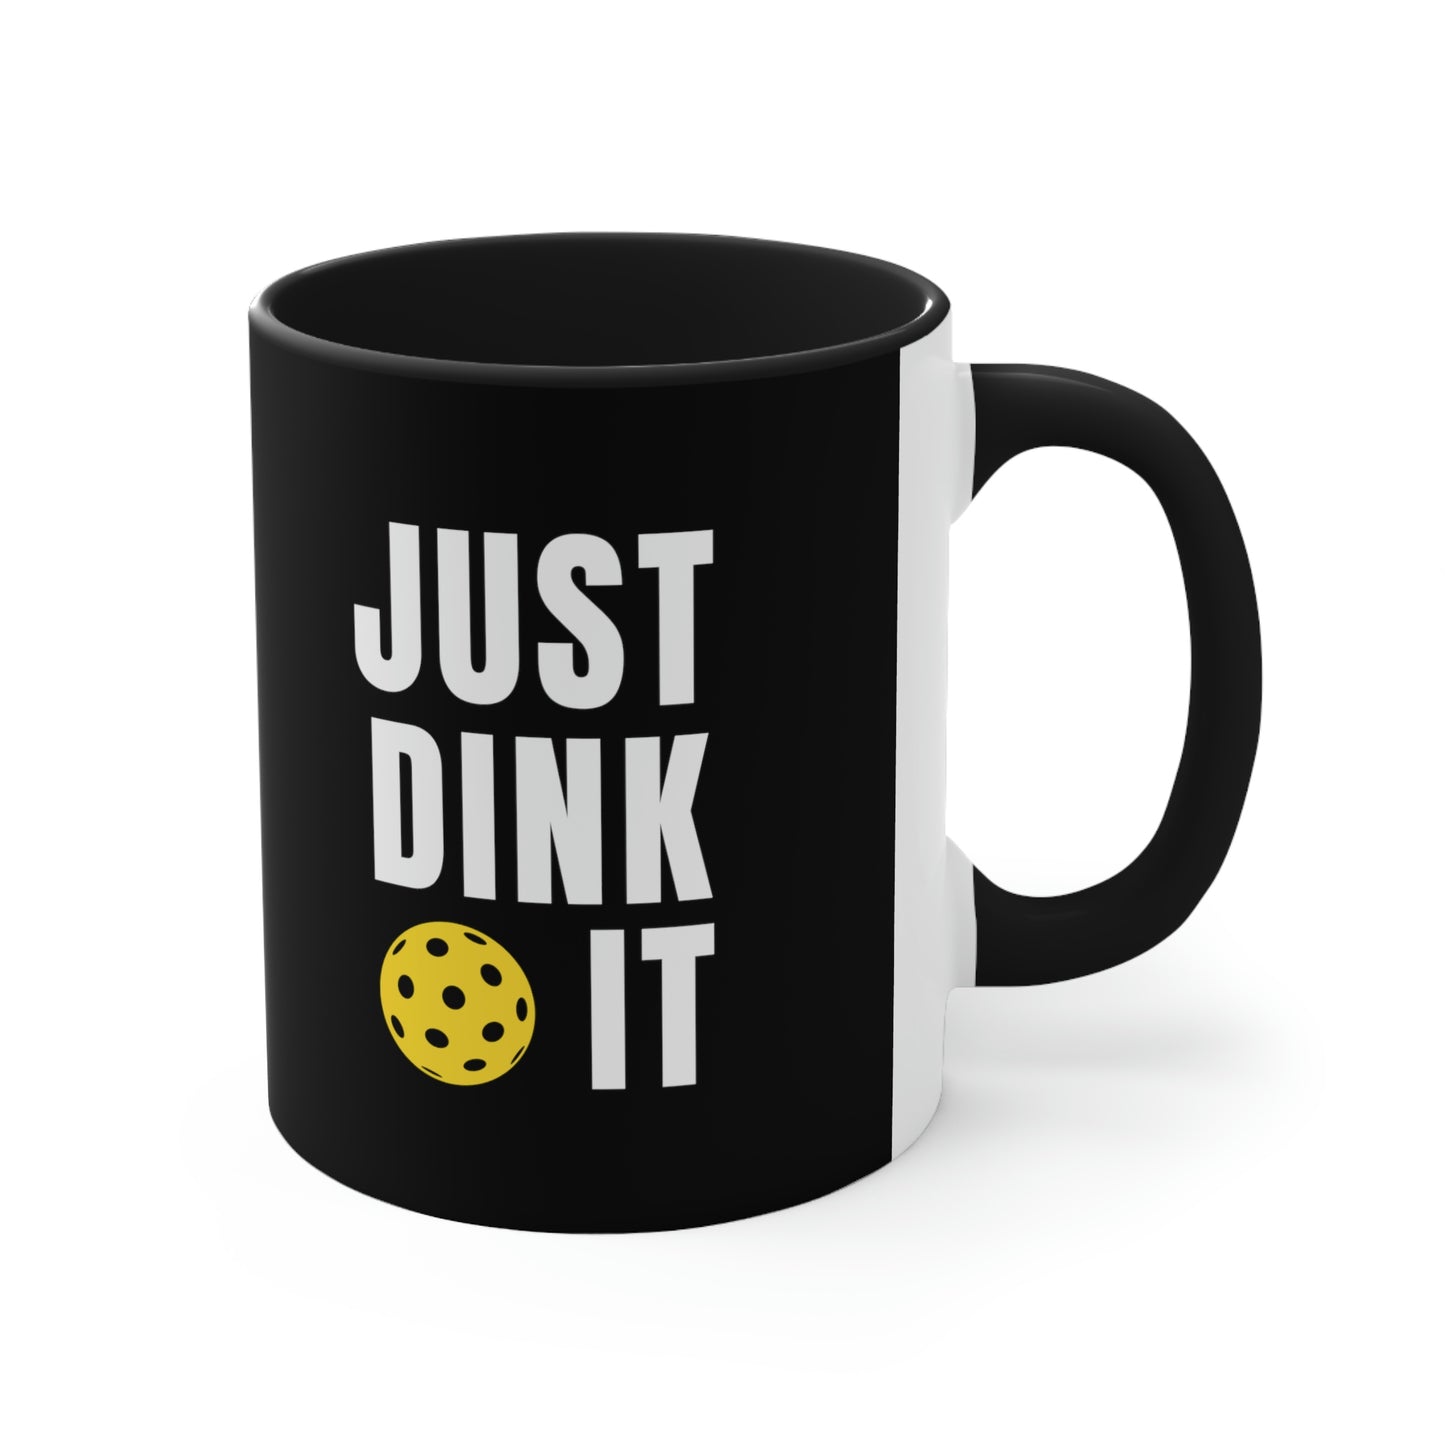 Just Dink it